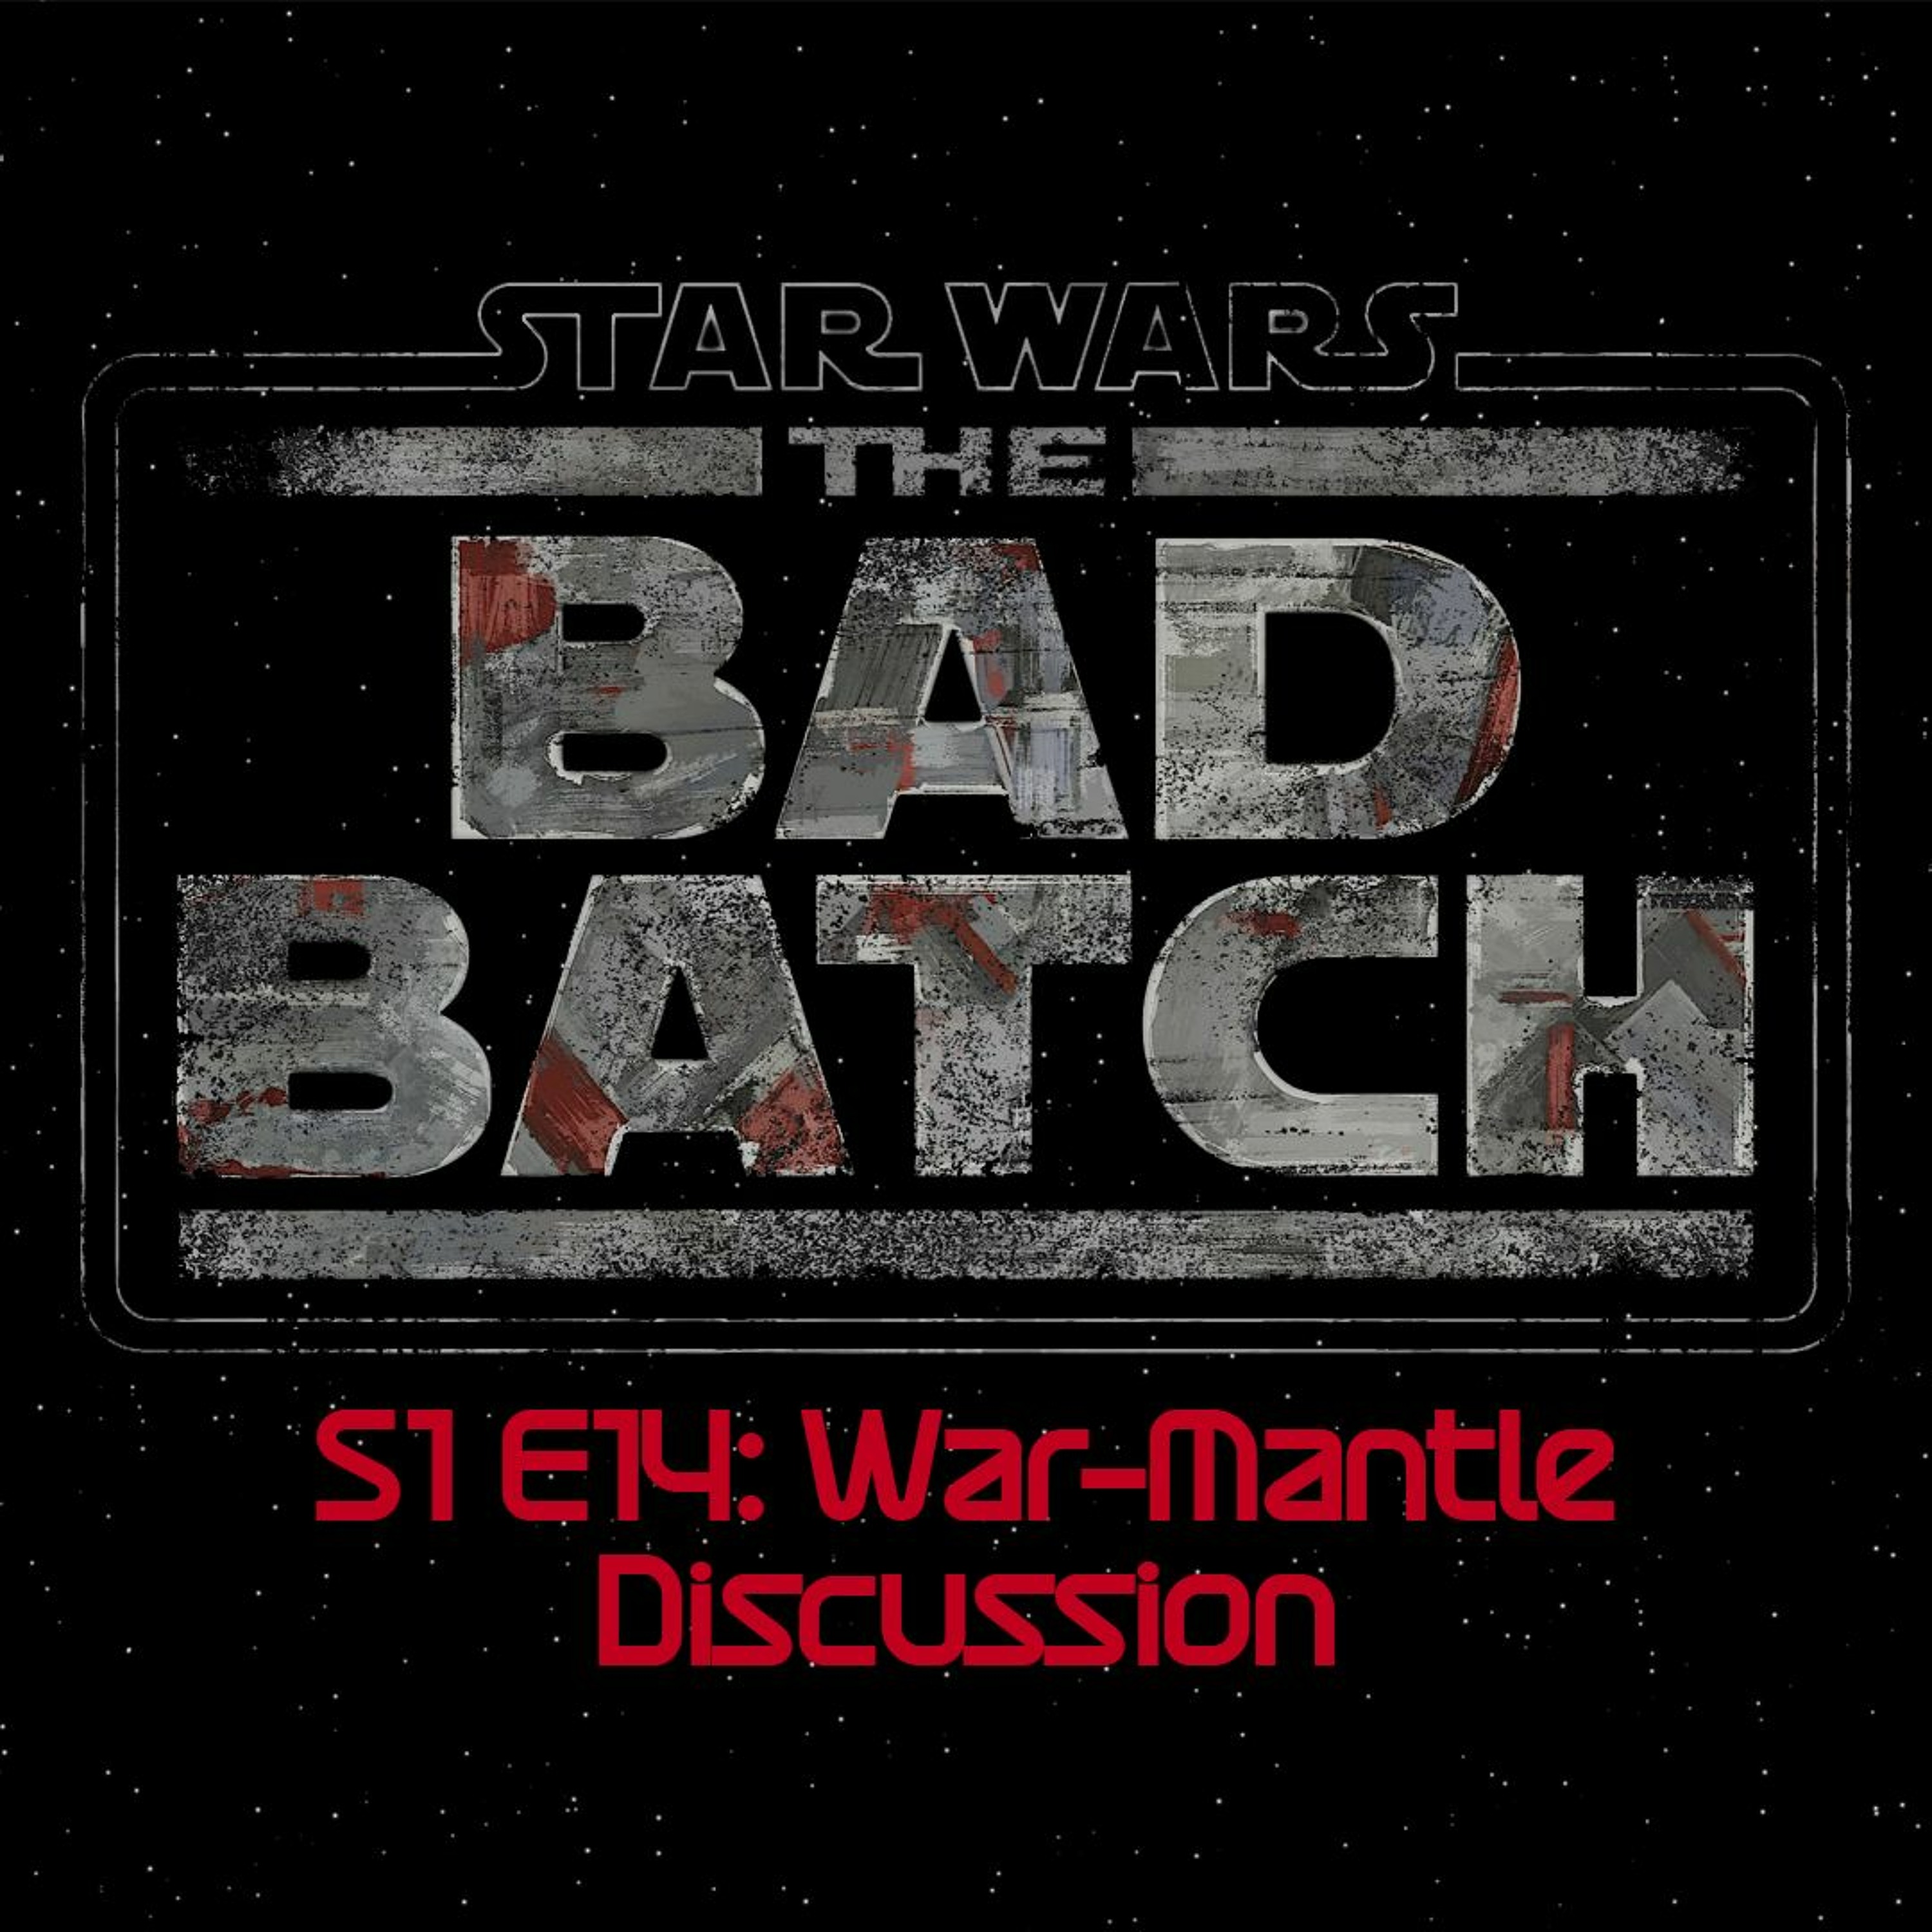 The Bad Batch S1E14: War-Mantle